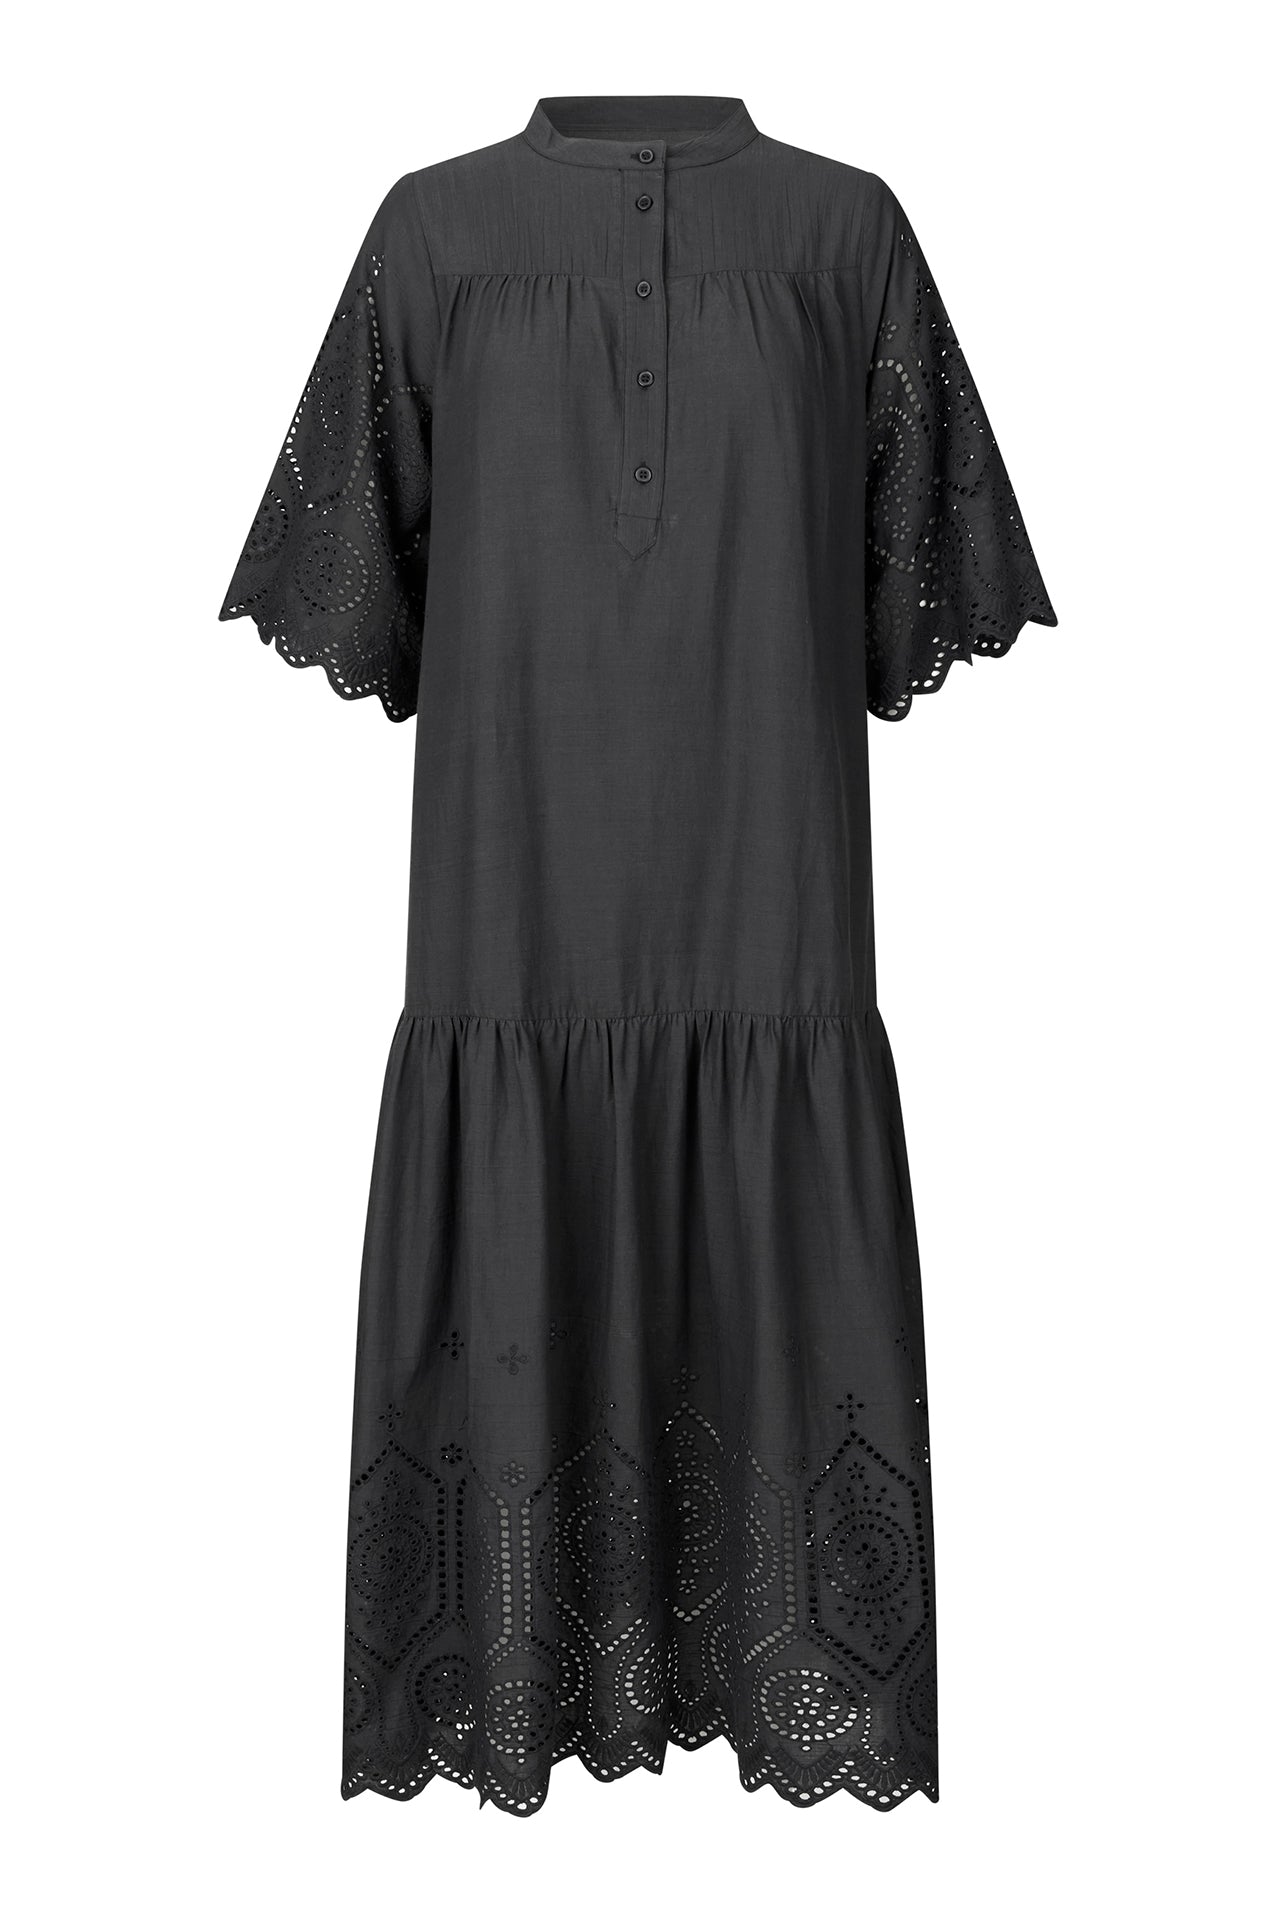 Lollys Laundry TimorLL Midi Dress SS Dress 18 Washed Black